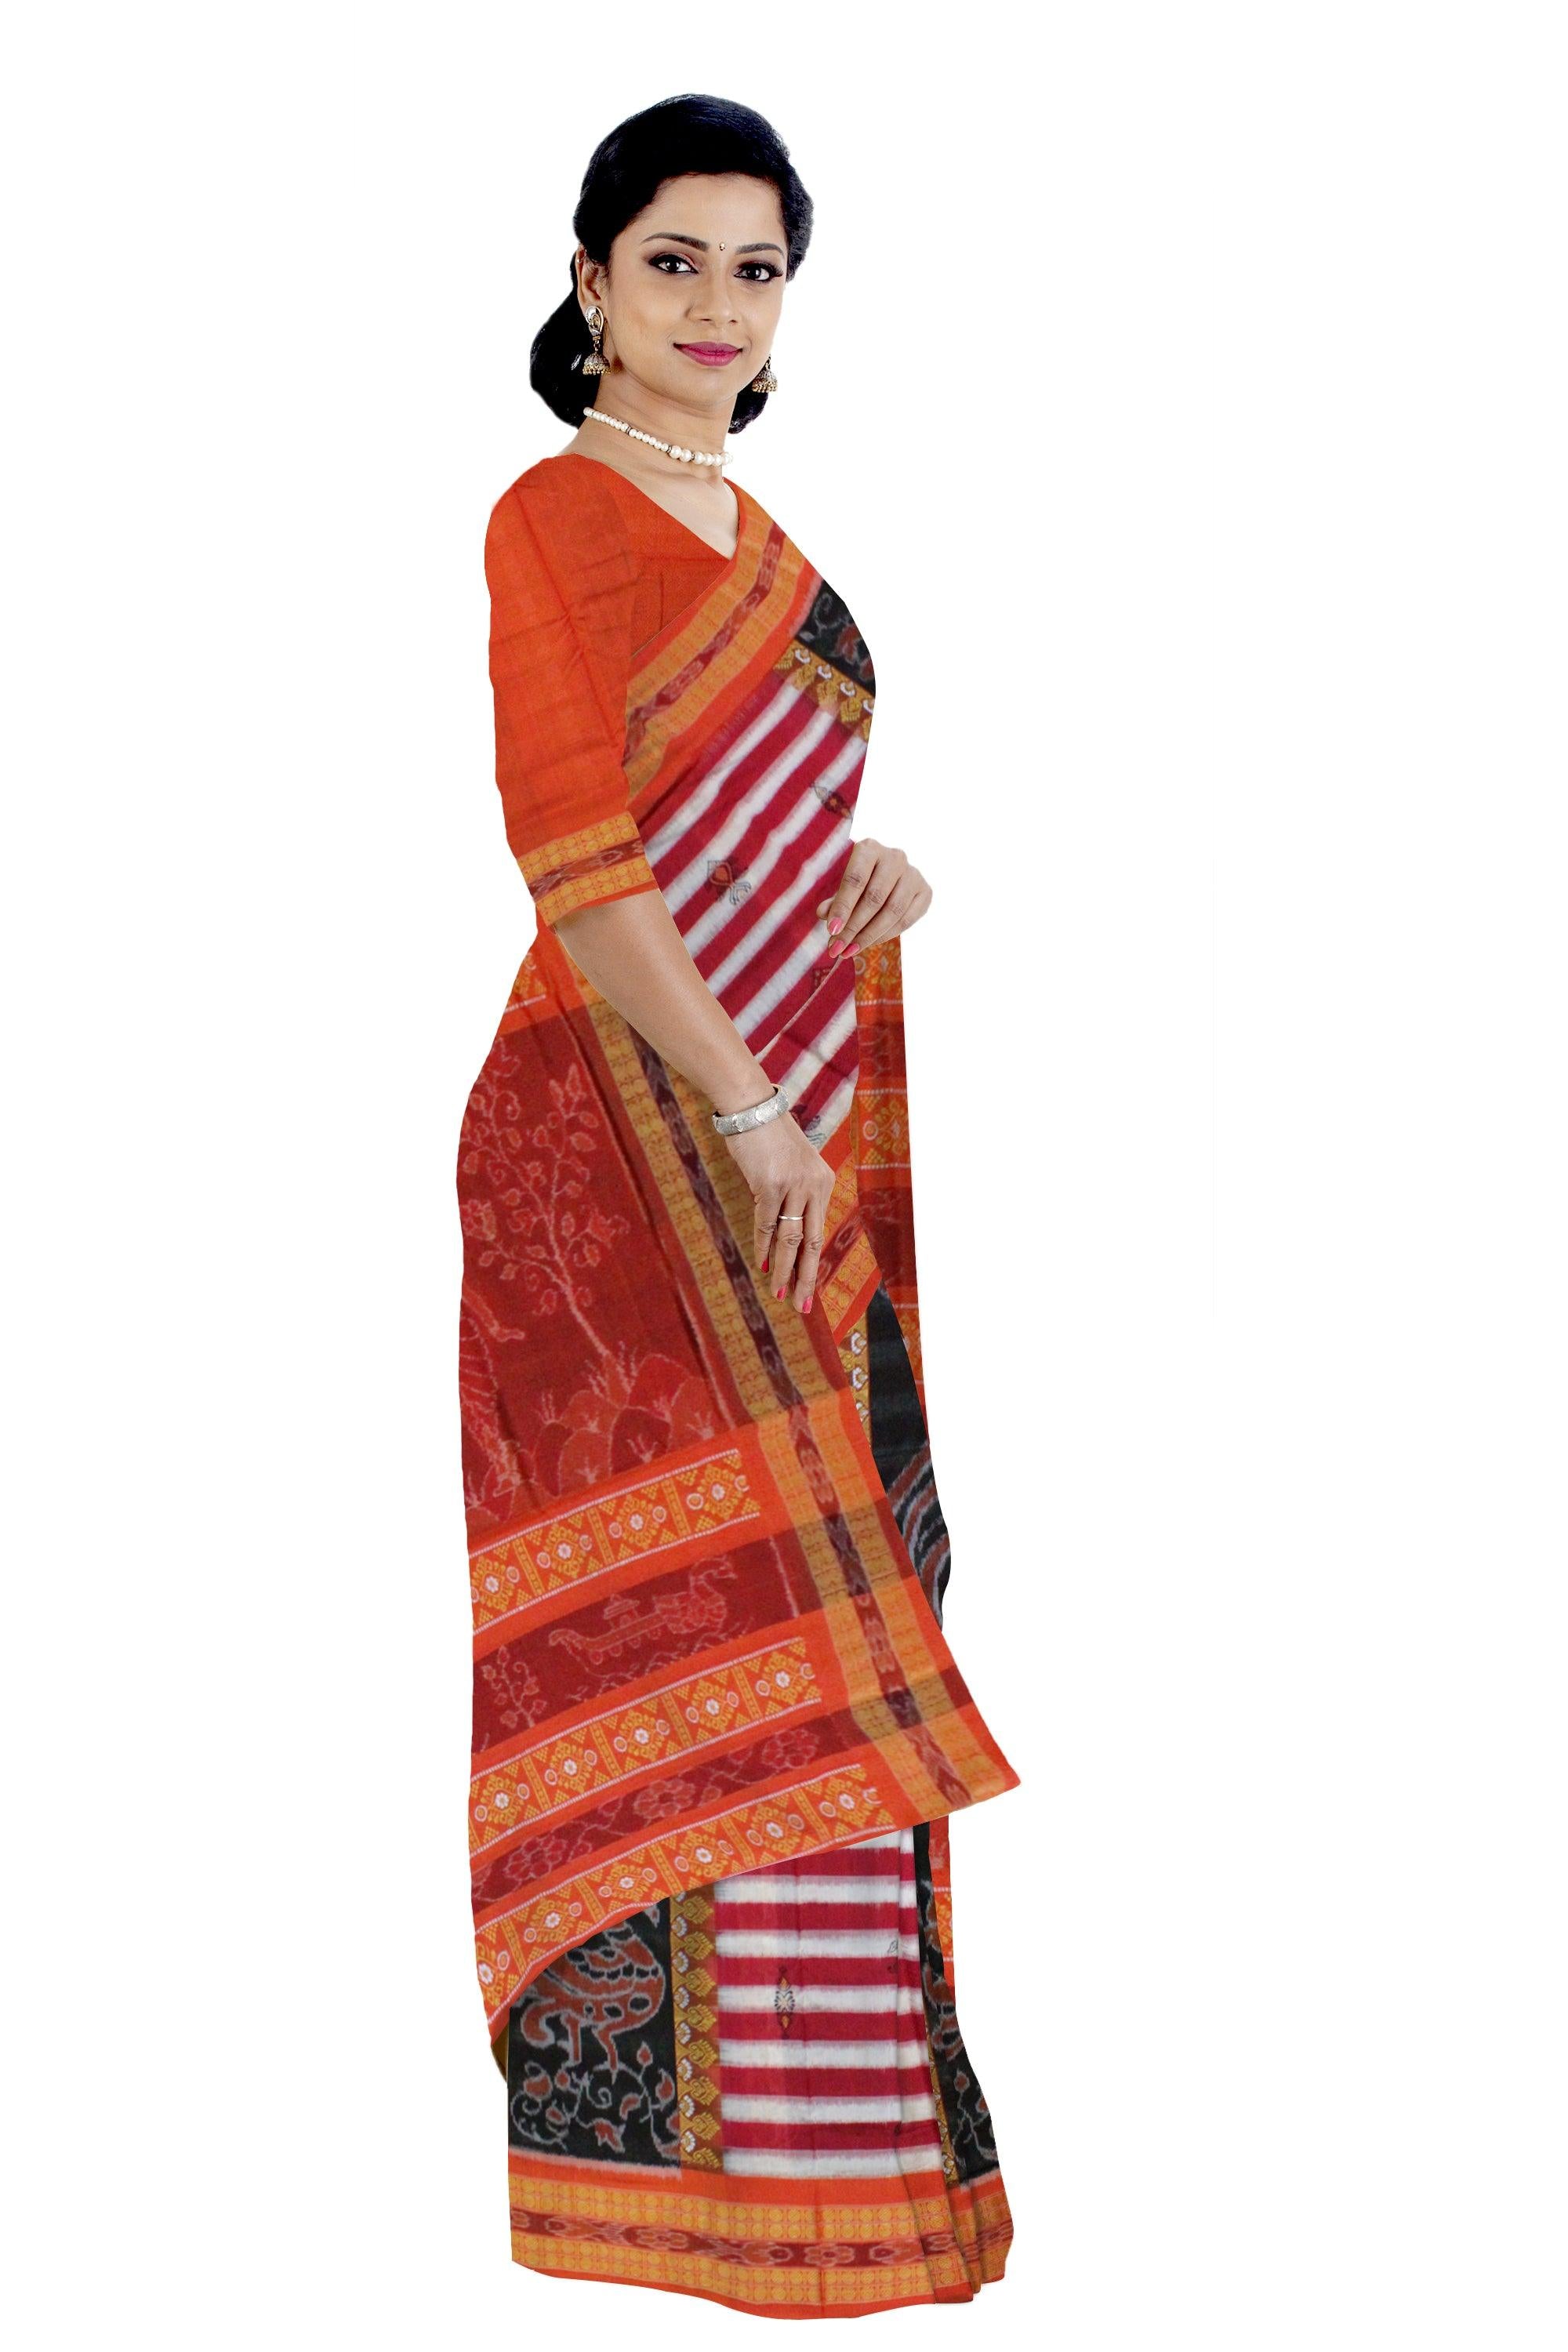 Mayurika on Body and Pink lining  Sambalpuri Cotton saree Bomkai Design in Dark Pink and Black Colour - Koshali Arts & Crafts Enterprise